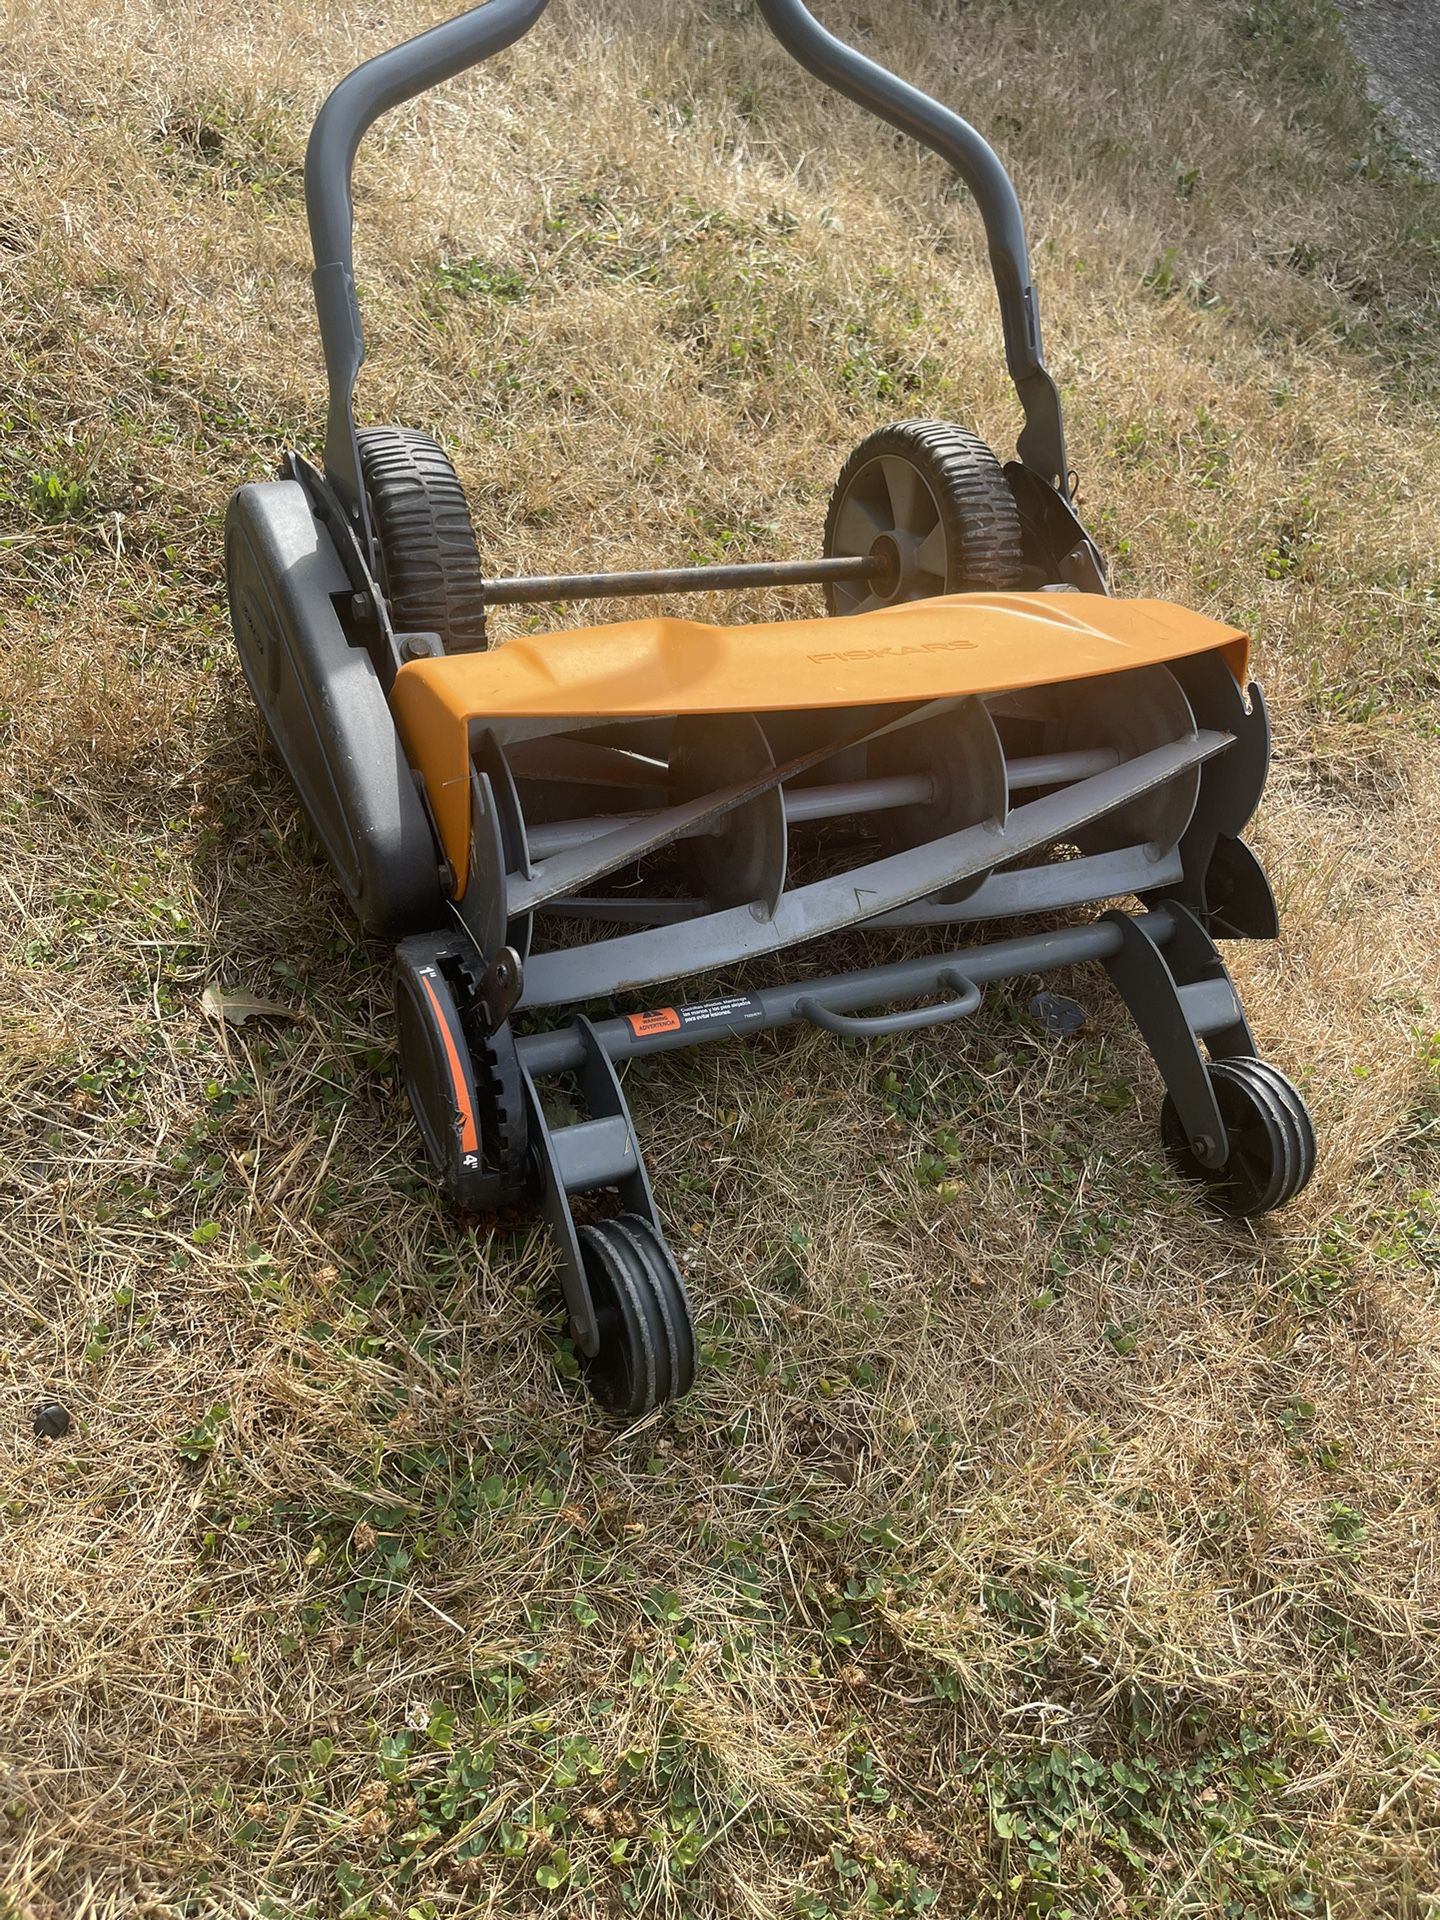 Fiskars StaySharp 18 Max Reel Manual Push-Behind Lawn Mower for